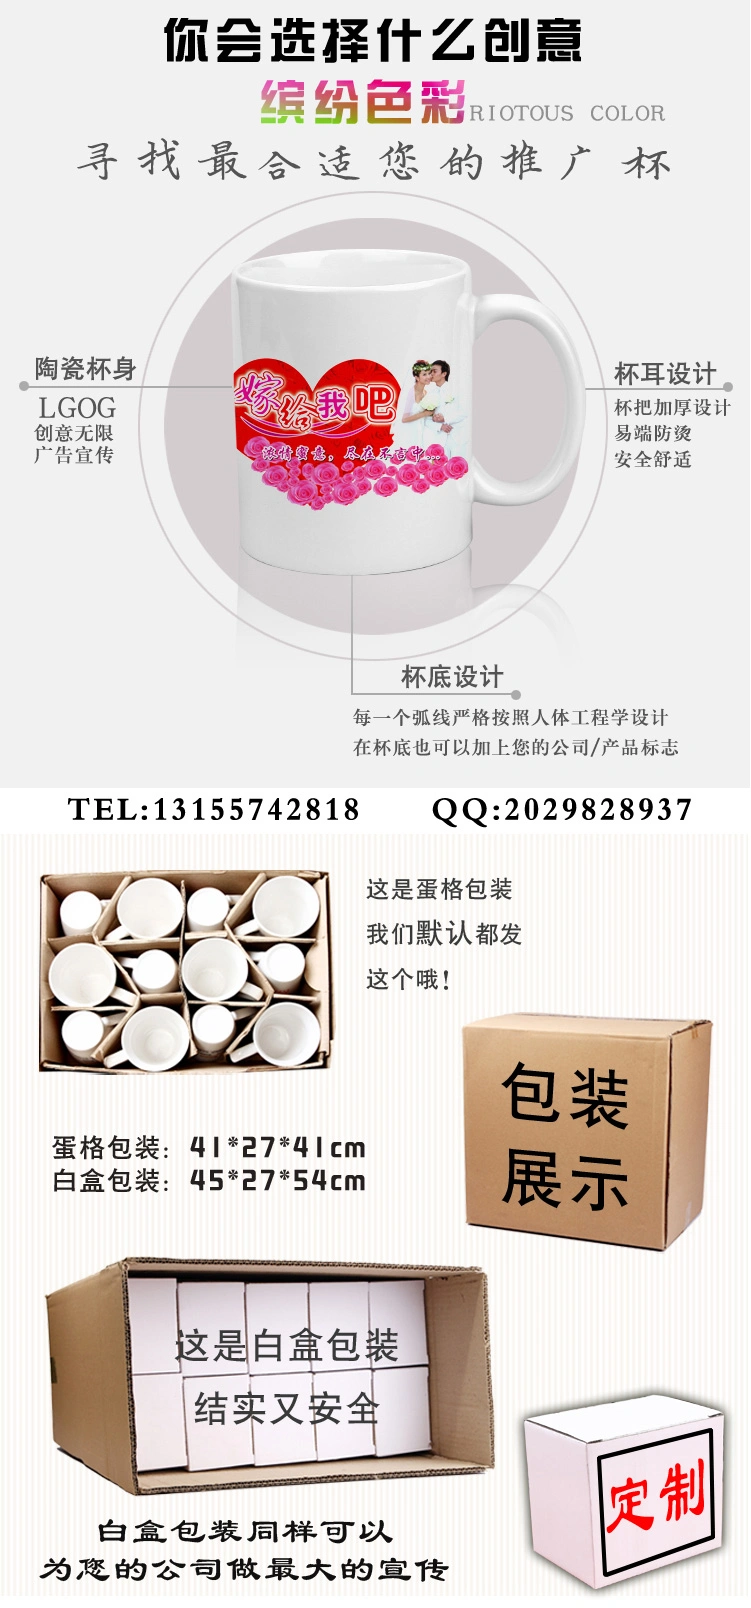 Sublimation White Mug, 11oz Ceramic Sublimation Heat Press Printing, 11oz Premiun Orca White Ceramic Sublimation Mugs